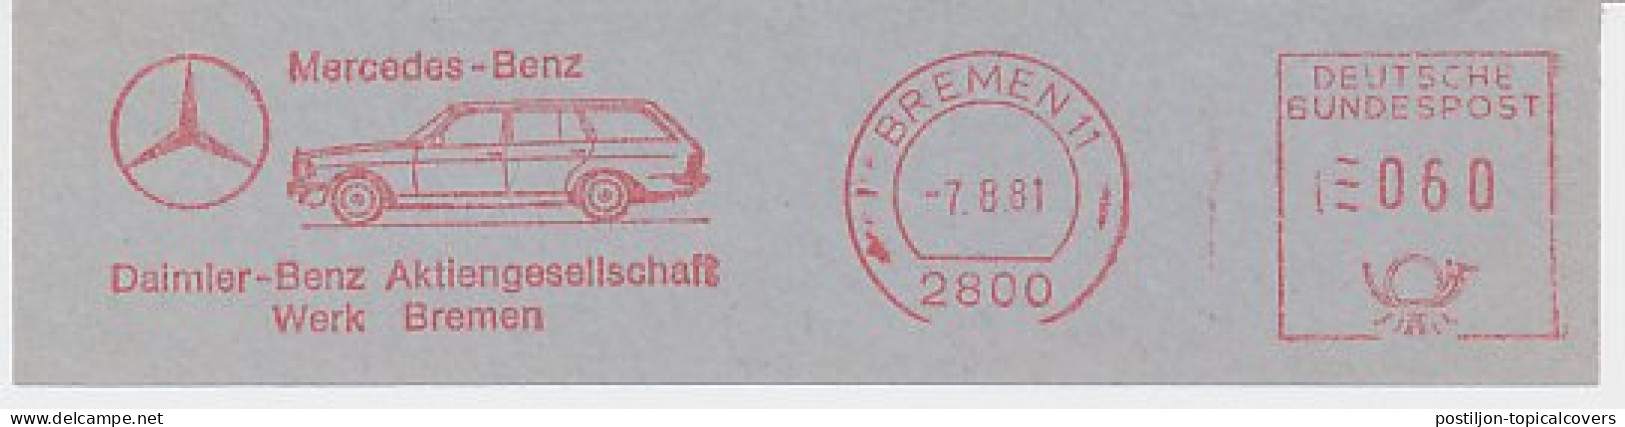 Meter Cut Germany 1981 Car - Mercedes Benz - Voitures